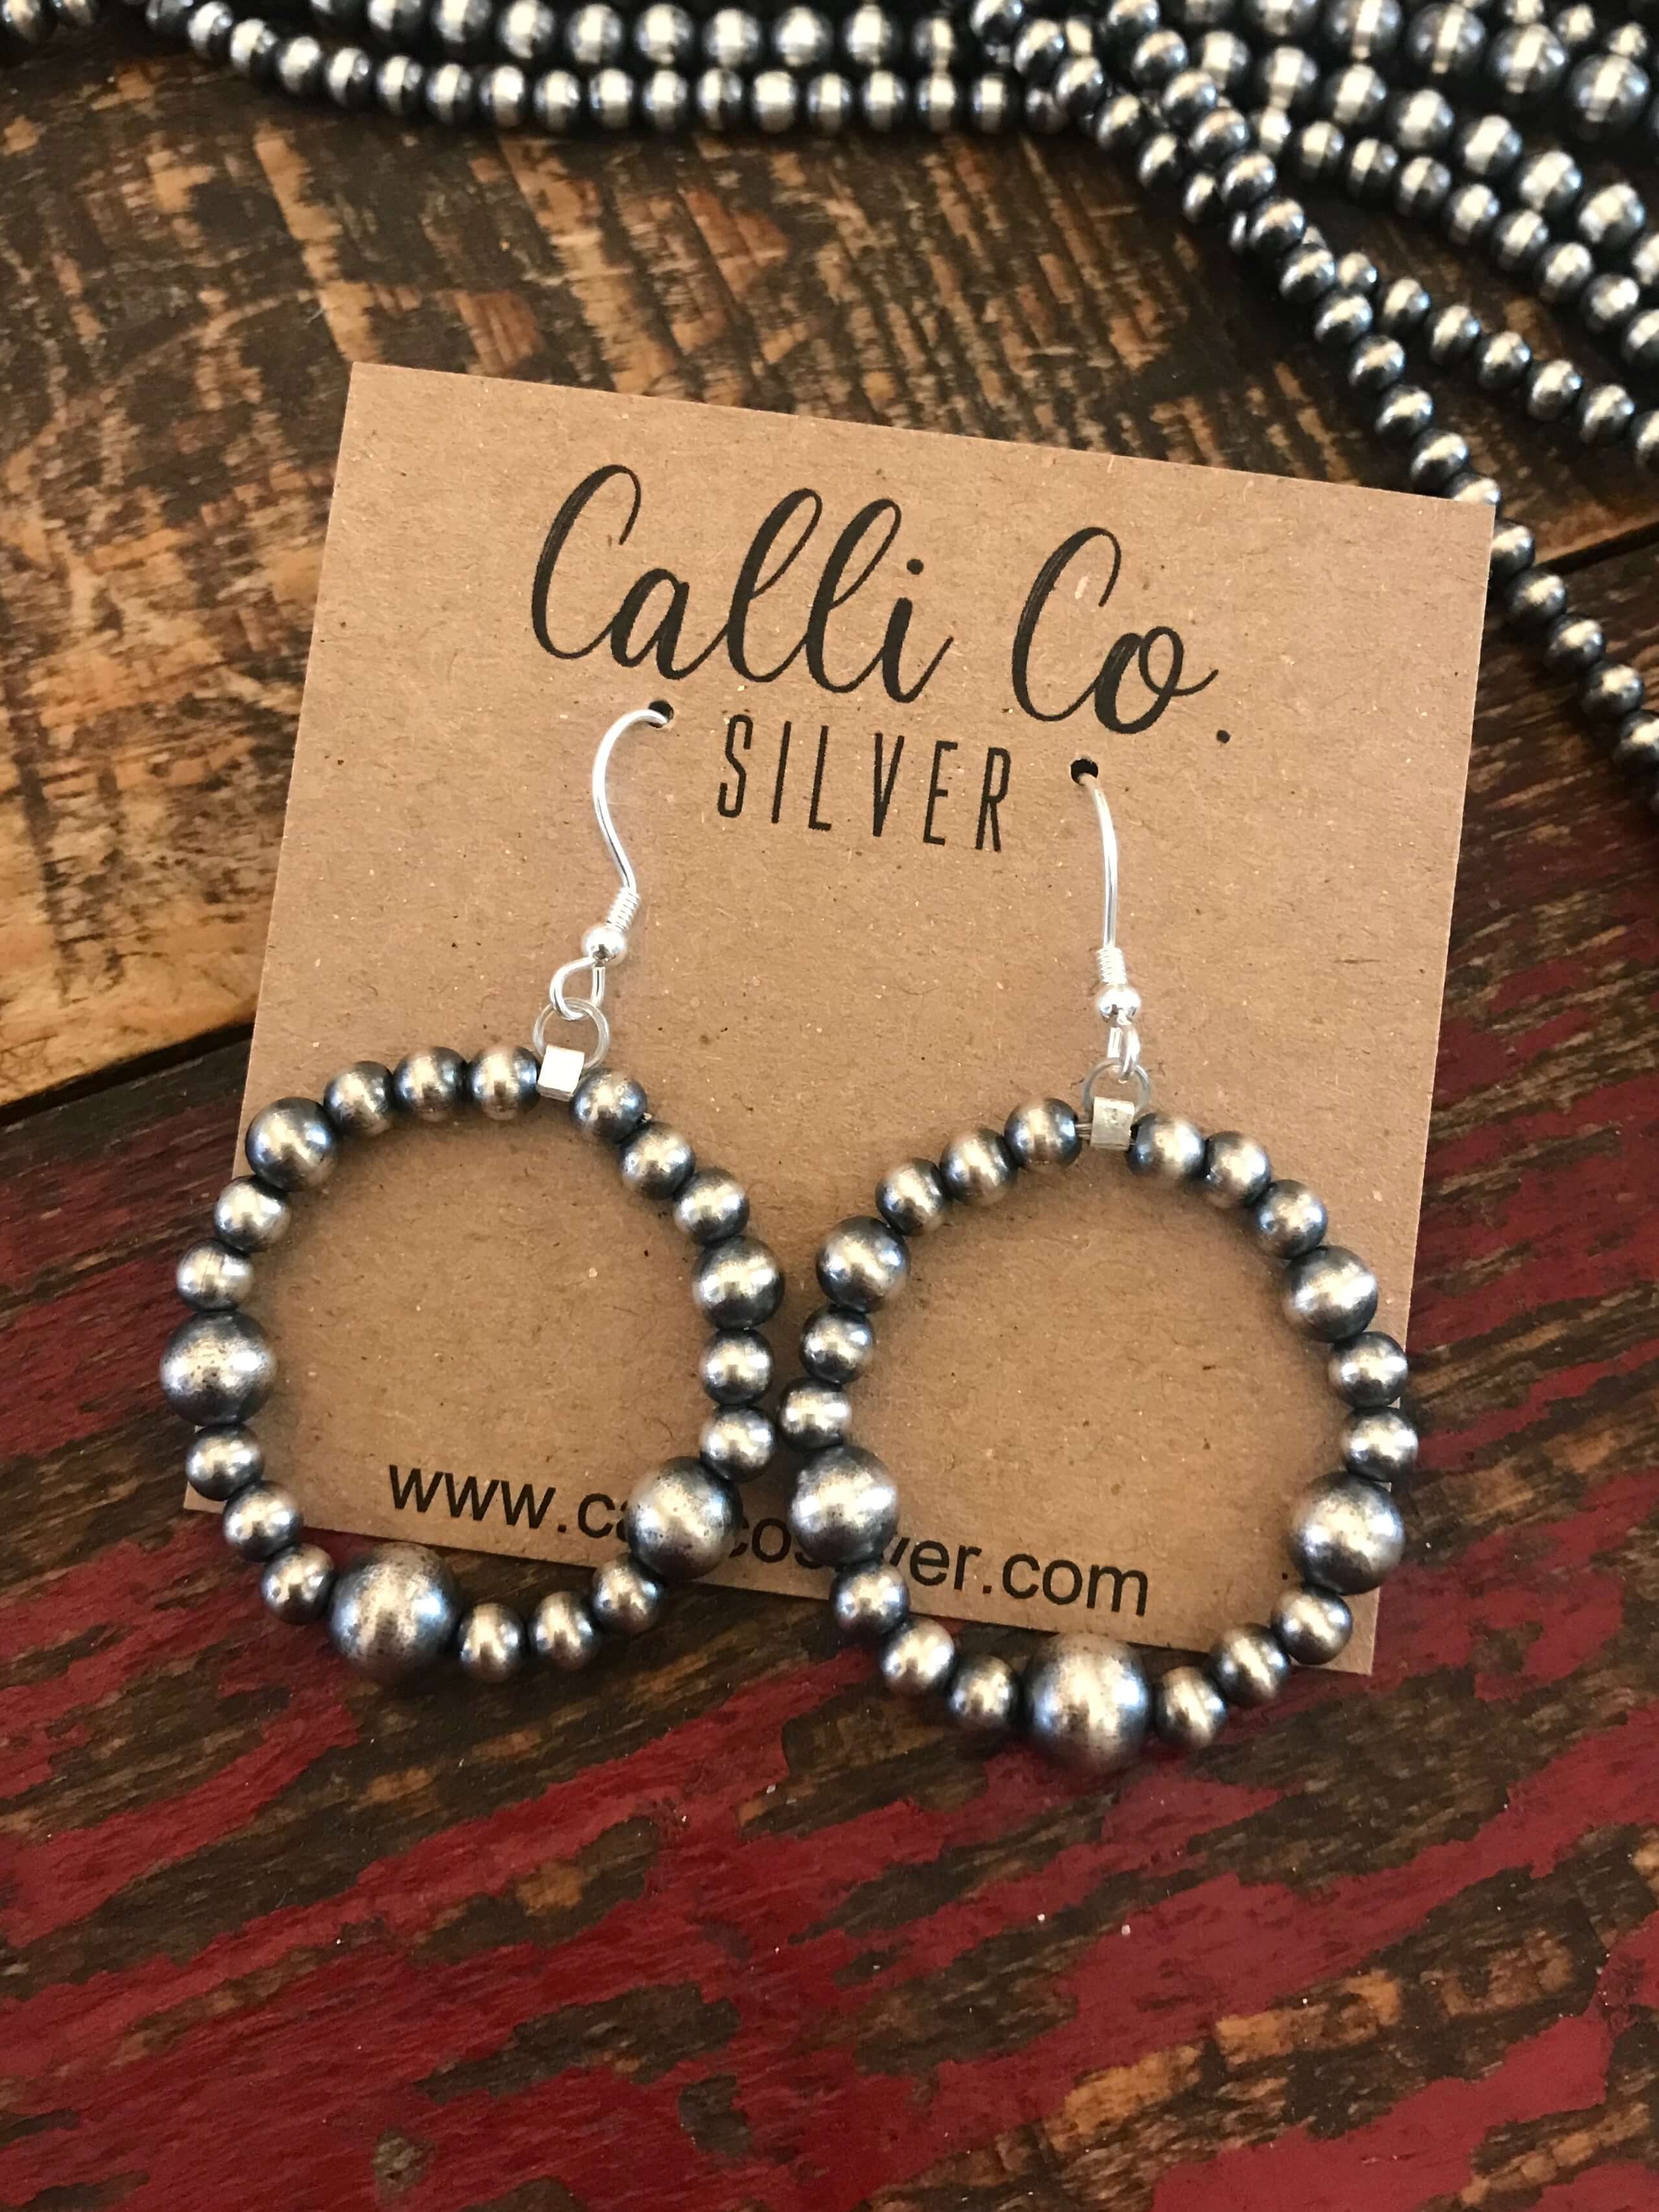 Shop Navajo Pearl Earrings | Calli Co. Silver | Dennis, TX 